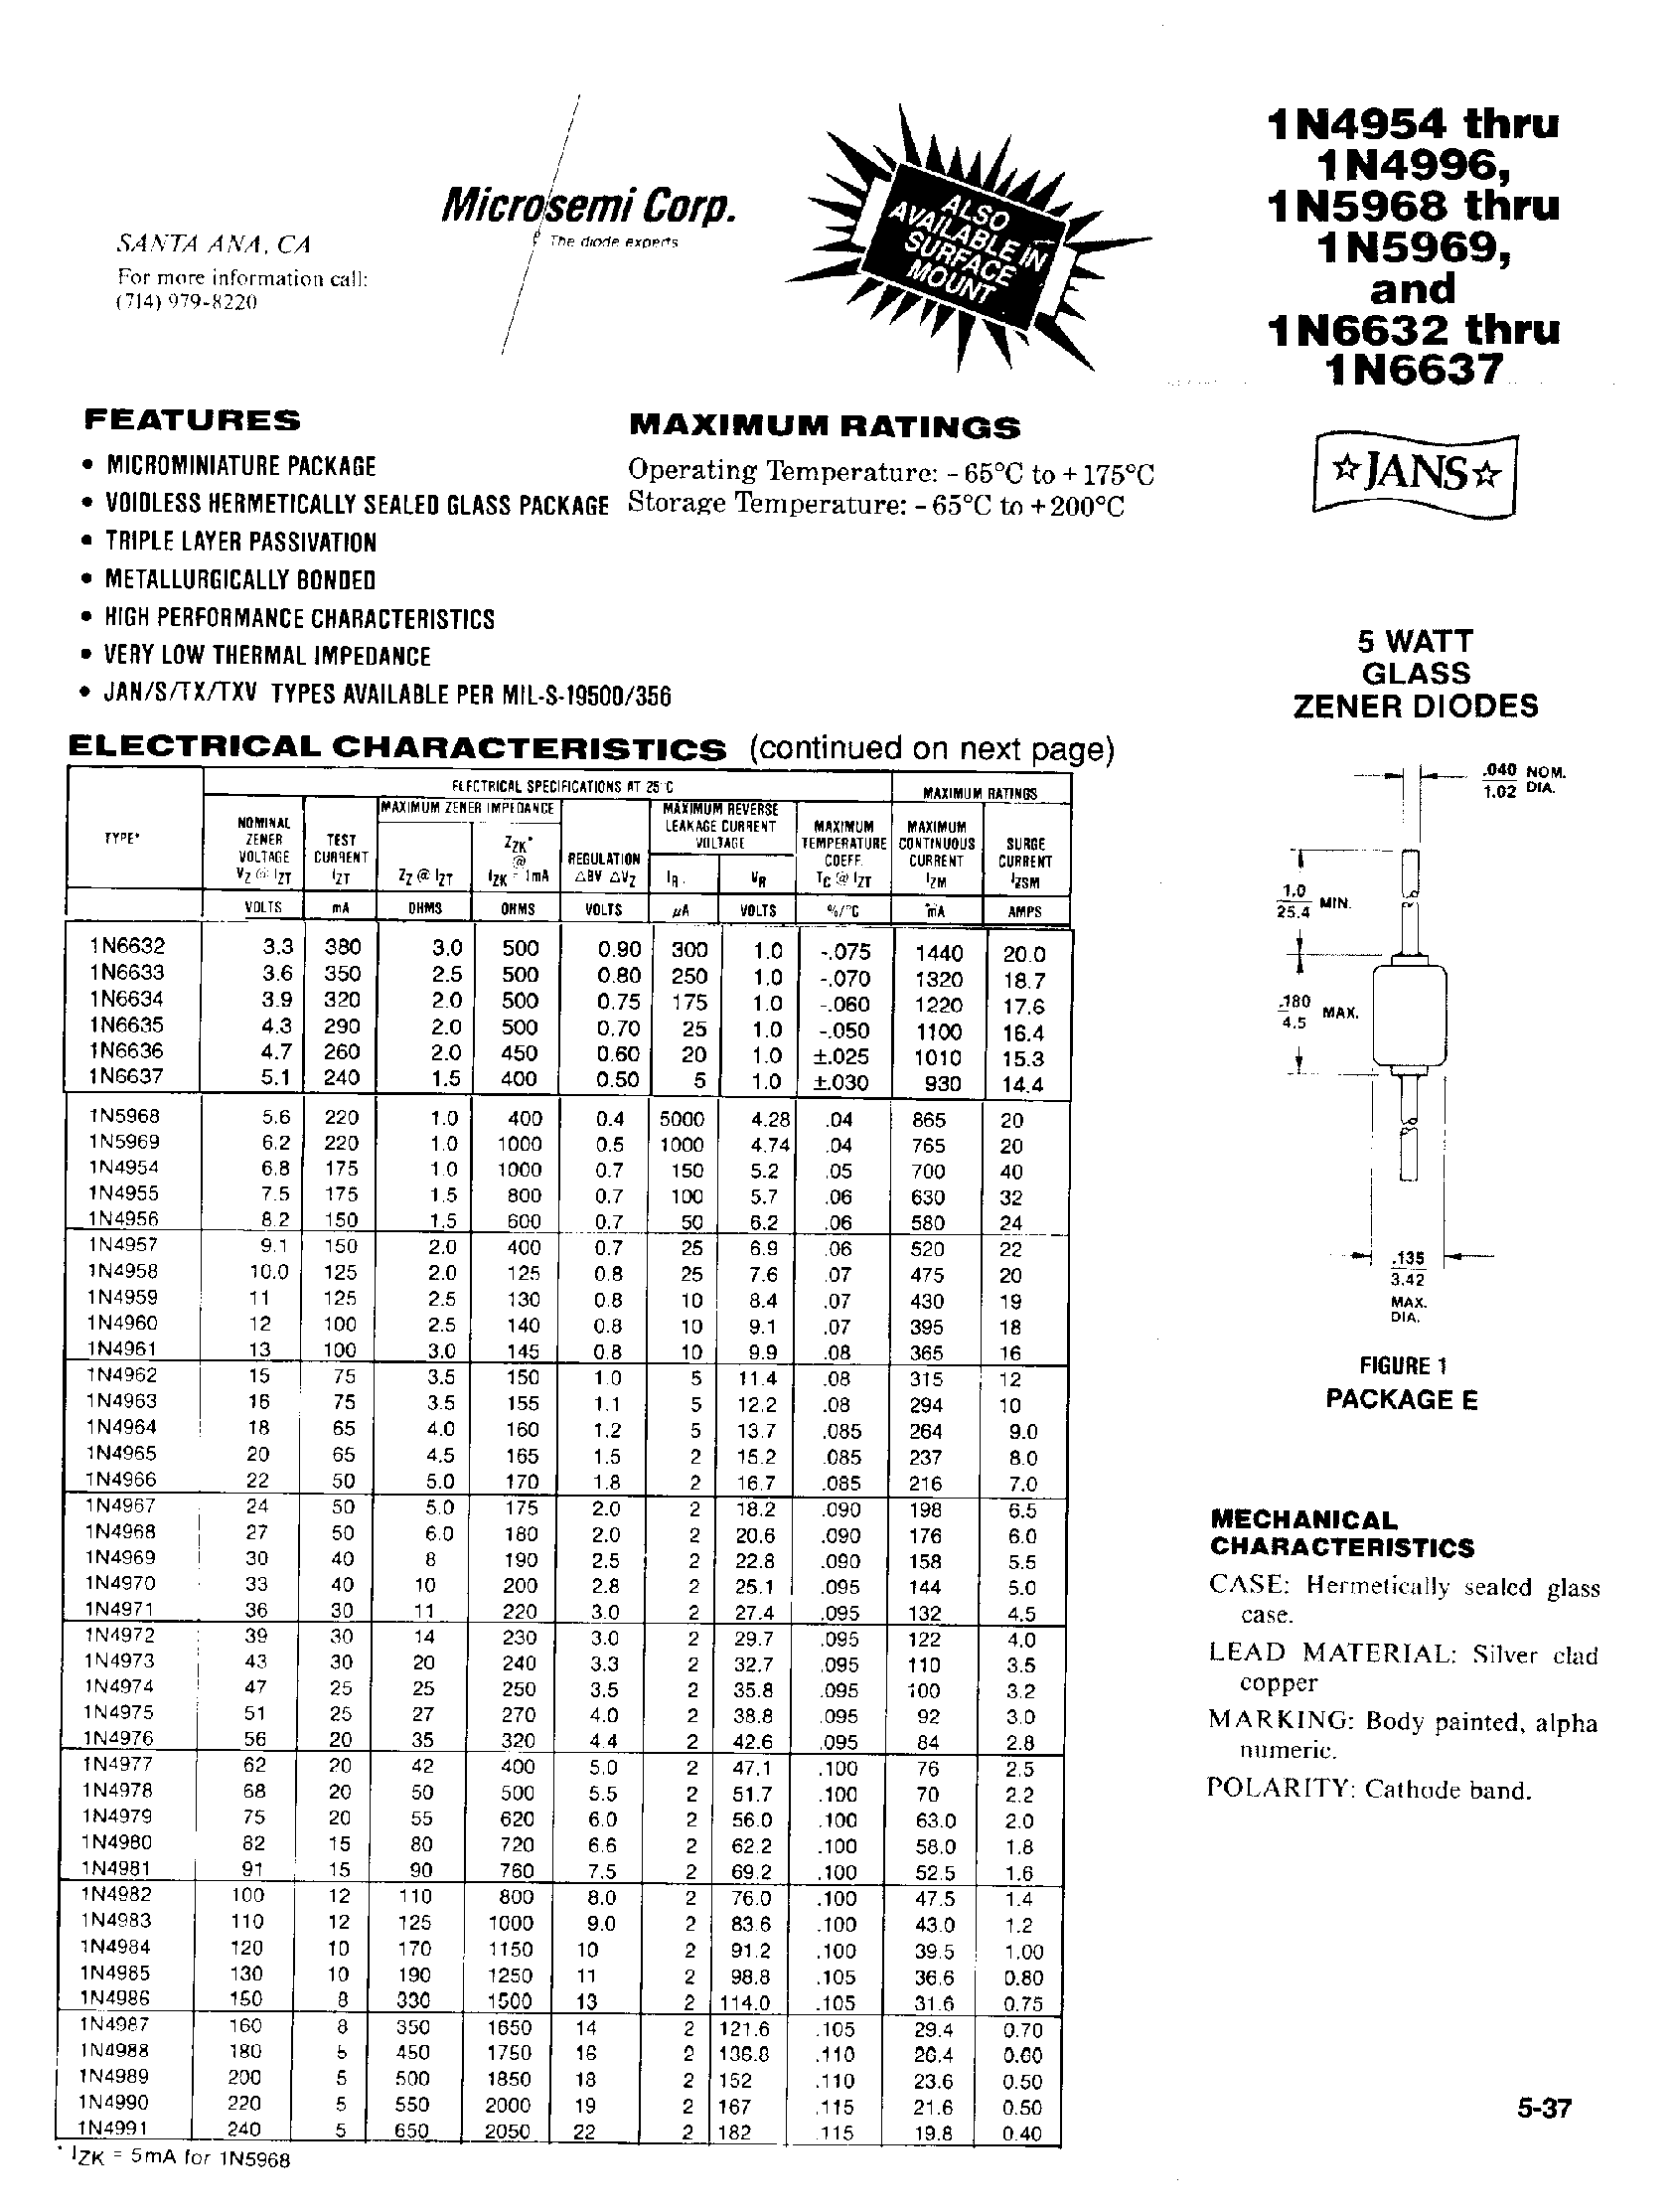 Datasheet 1N4984 - 5 WATT GLASS ZENER DIODES page 1